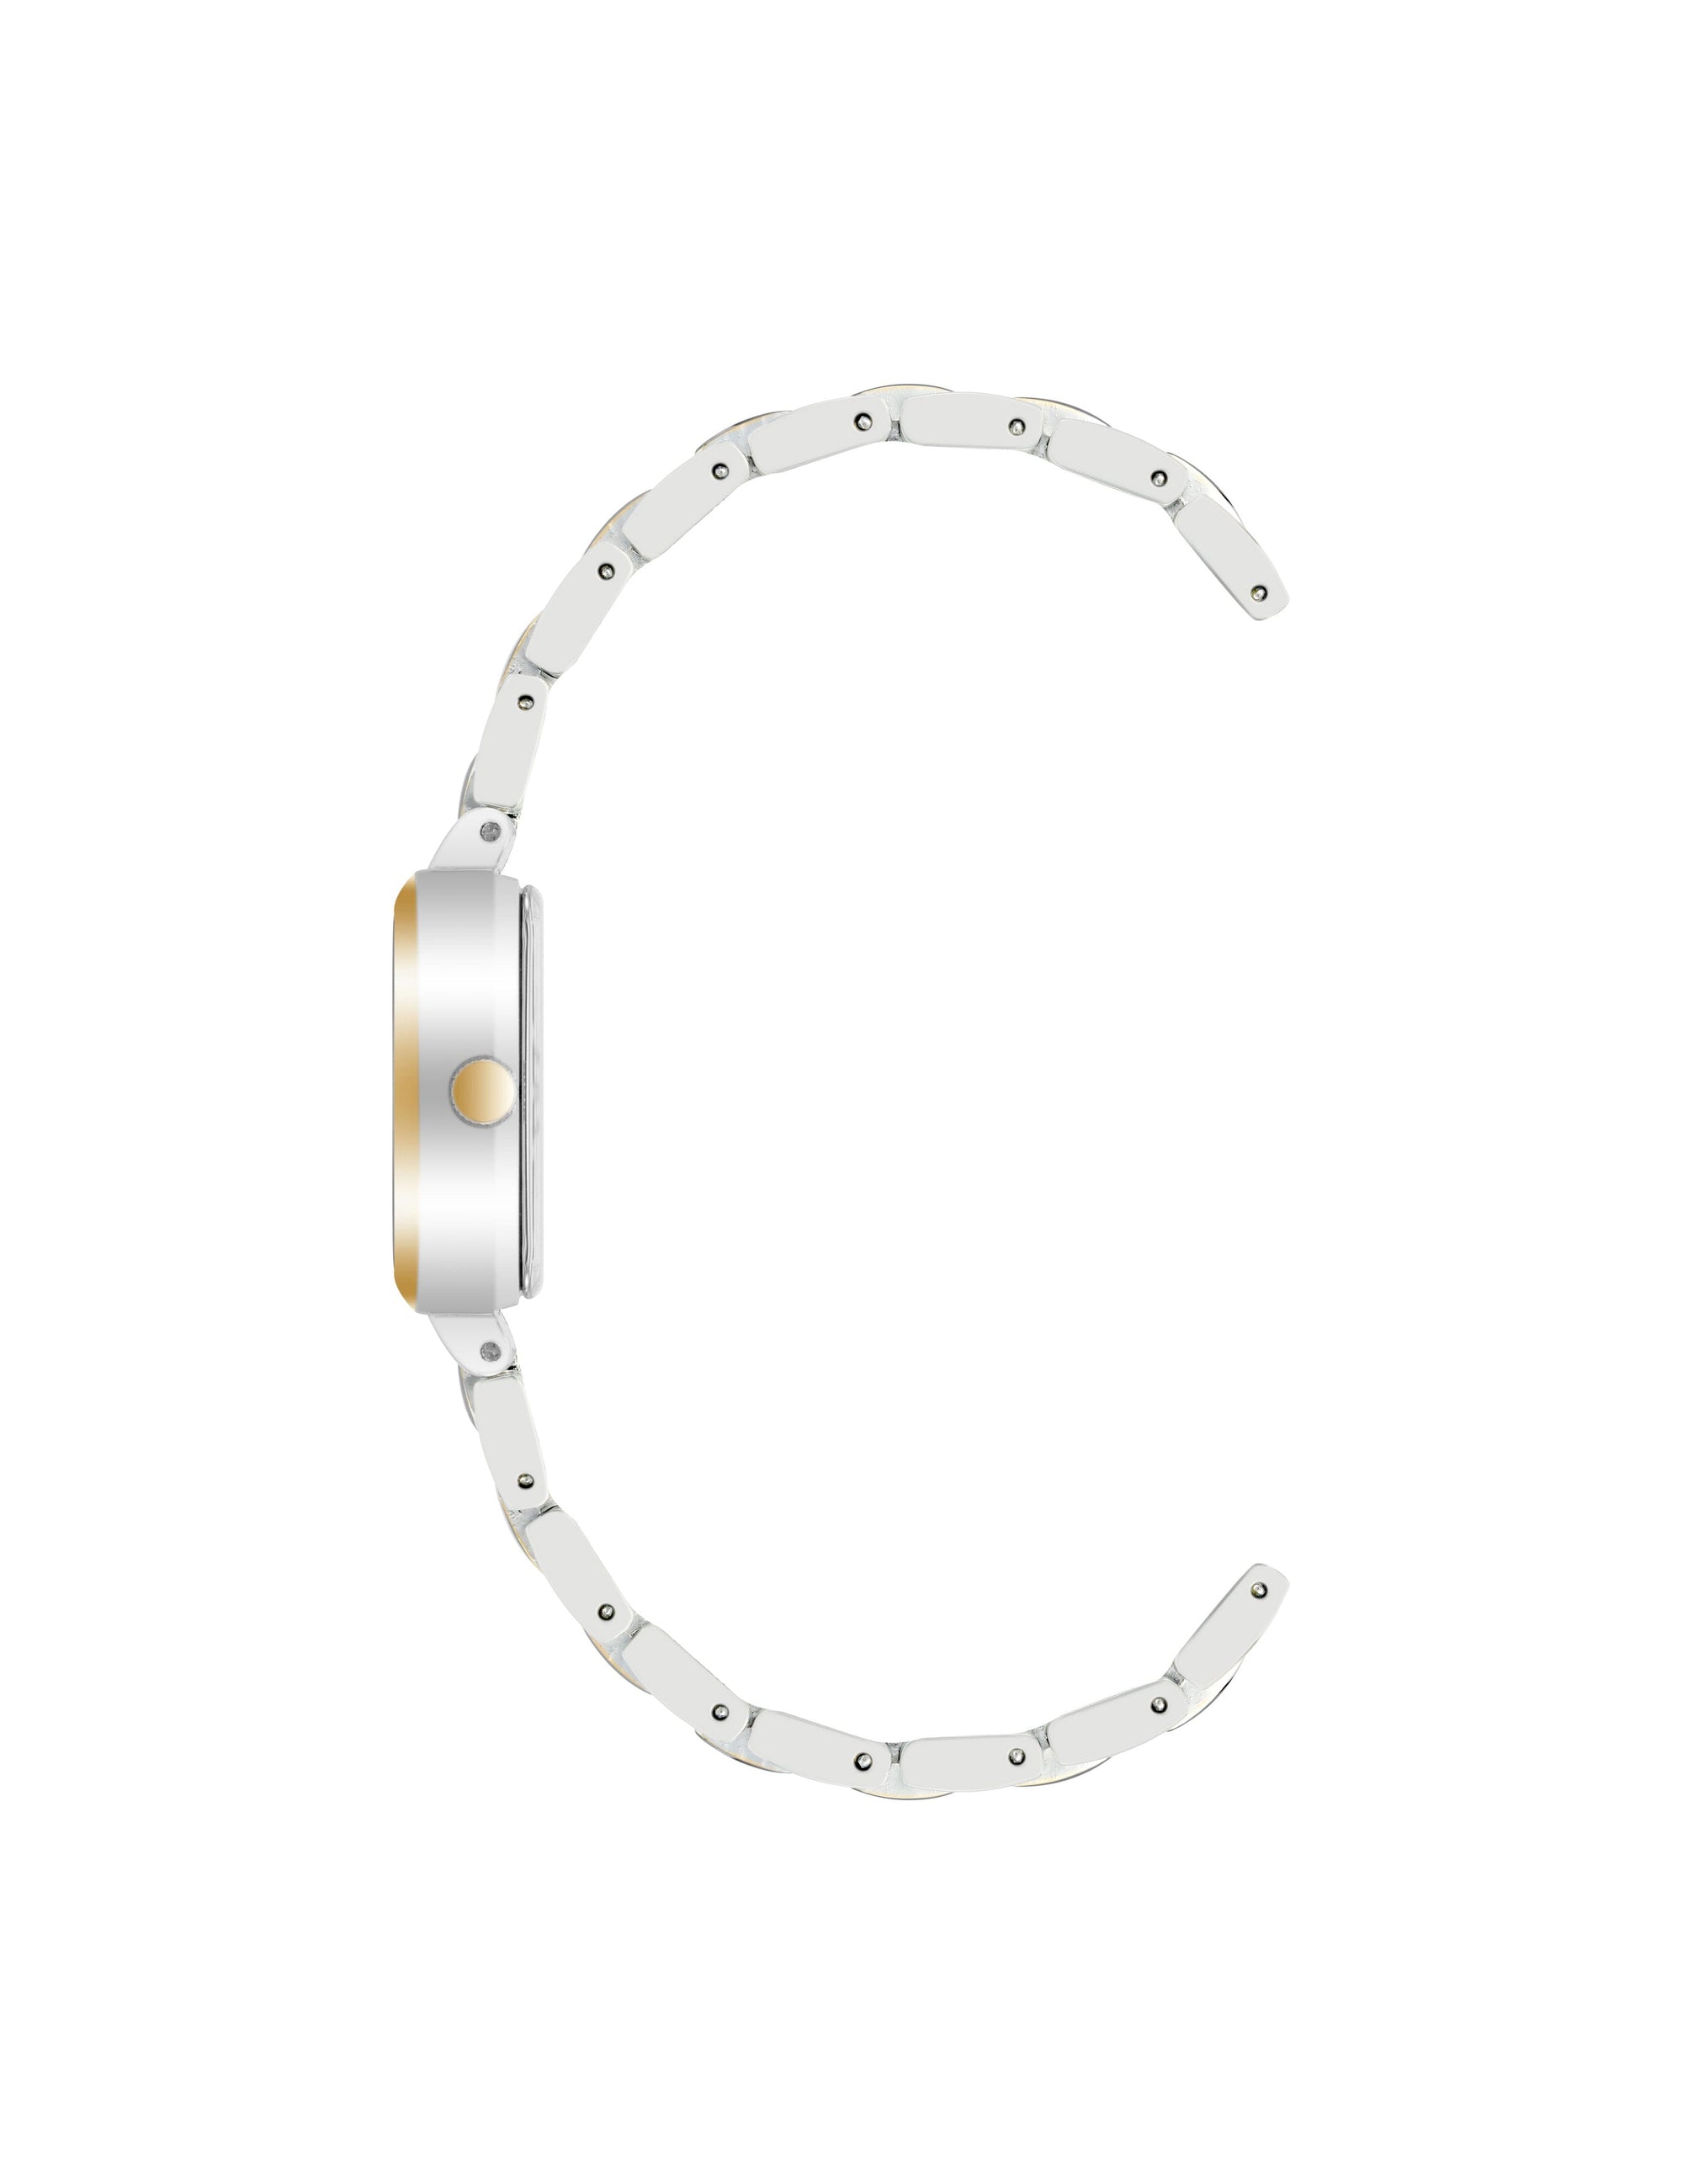 Anne Klein Silver-Tone/ Gold-Tone Square Case Two-Tone Bracelet Watch